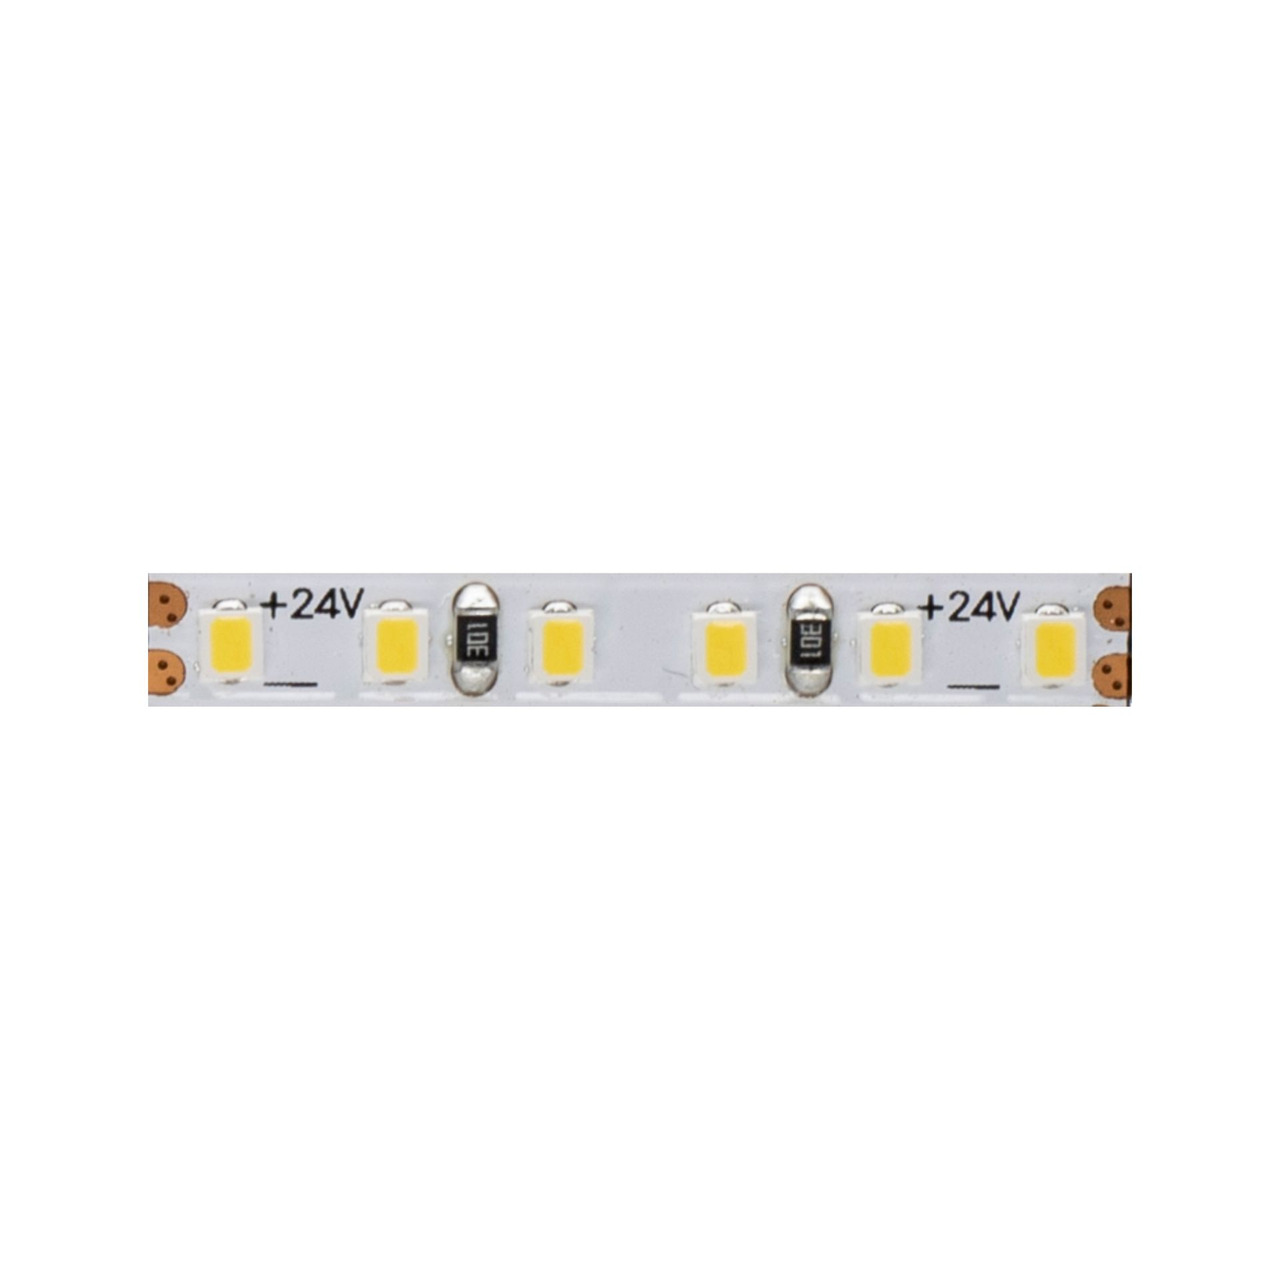 Beneito 5-m-LED-Streifen FINE-49- 50 W- 24 V DC- 2700 K- 90 Ra- 10 W-m- 710 lm-m- 204 LEDs-m- IP20 unter Beleuchtung